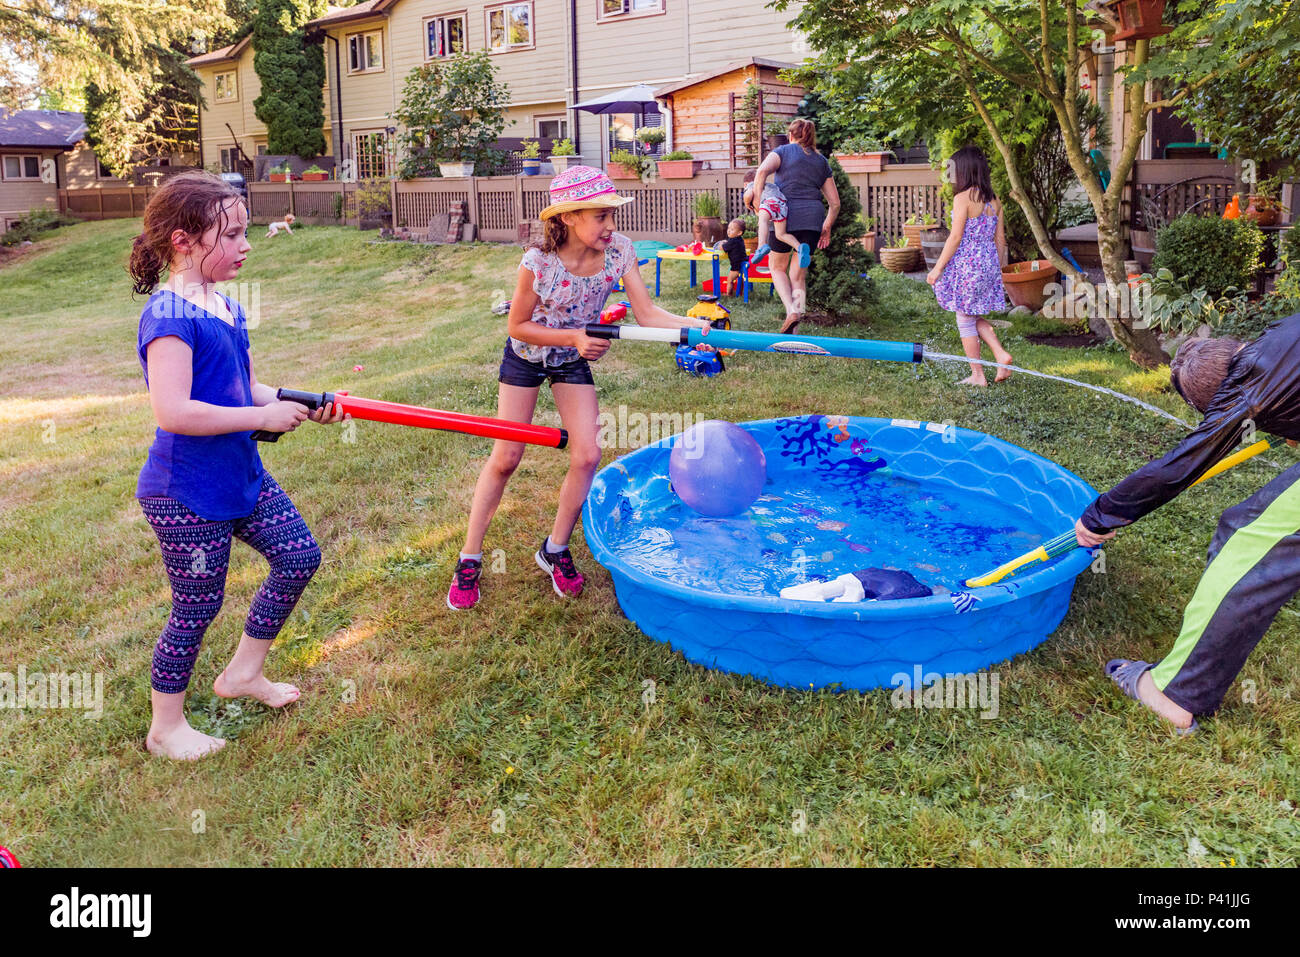 Keeping Cool Summer Fun Kids Have Friendly Backyard Water Fight Stock Photo Alamy